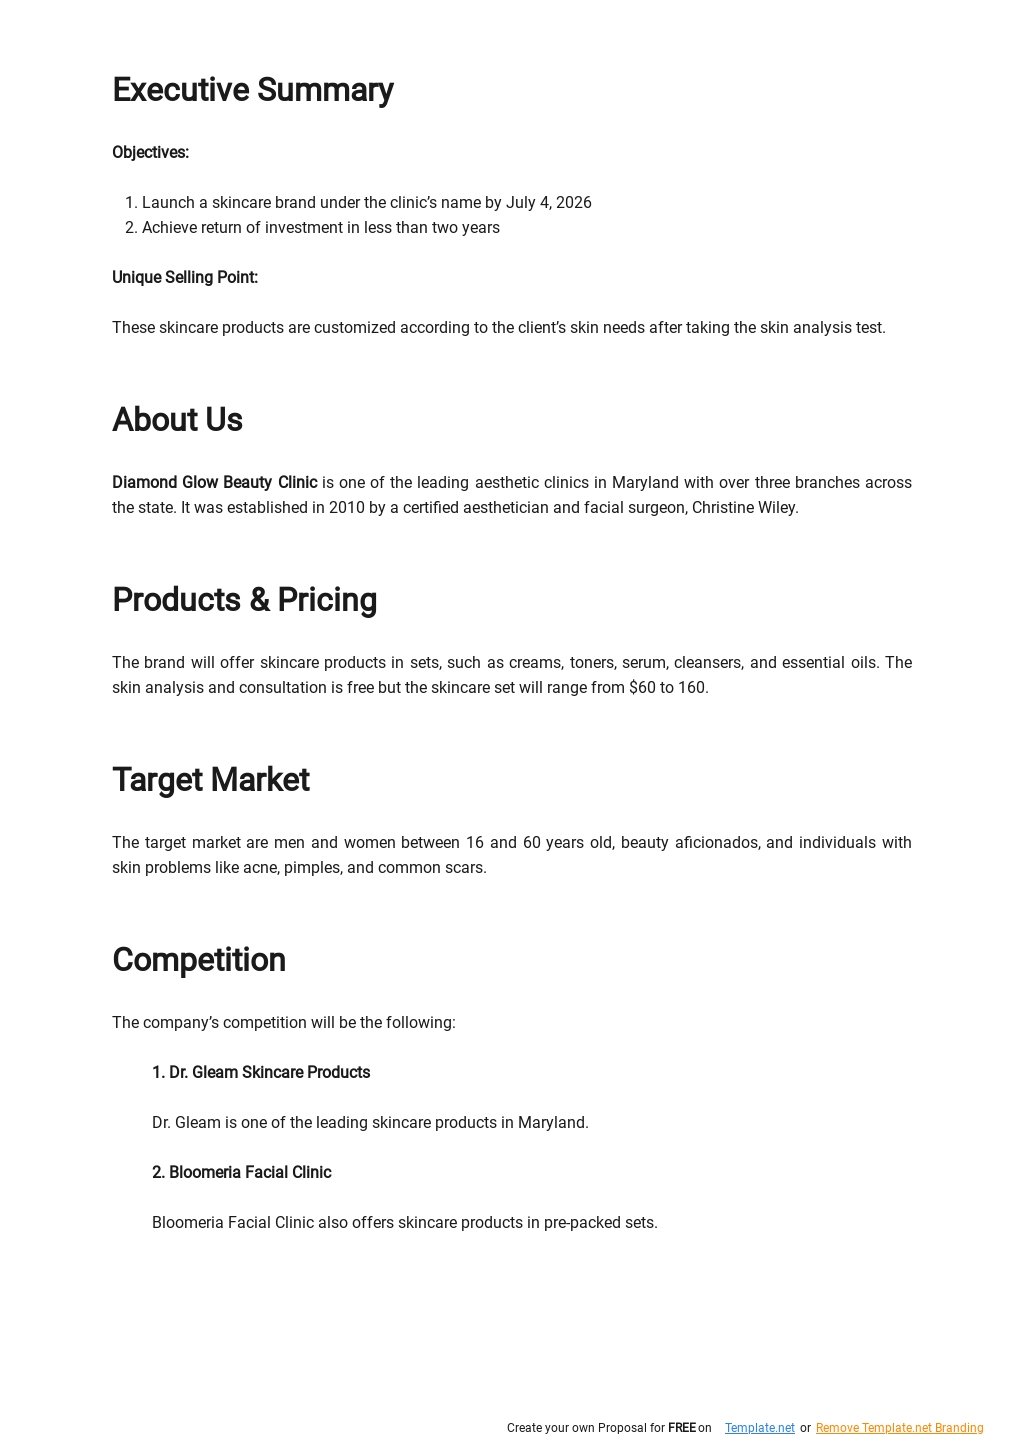 branding agency business plan pdf